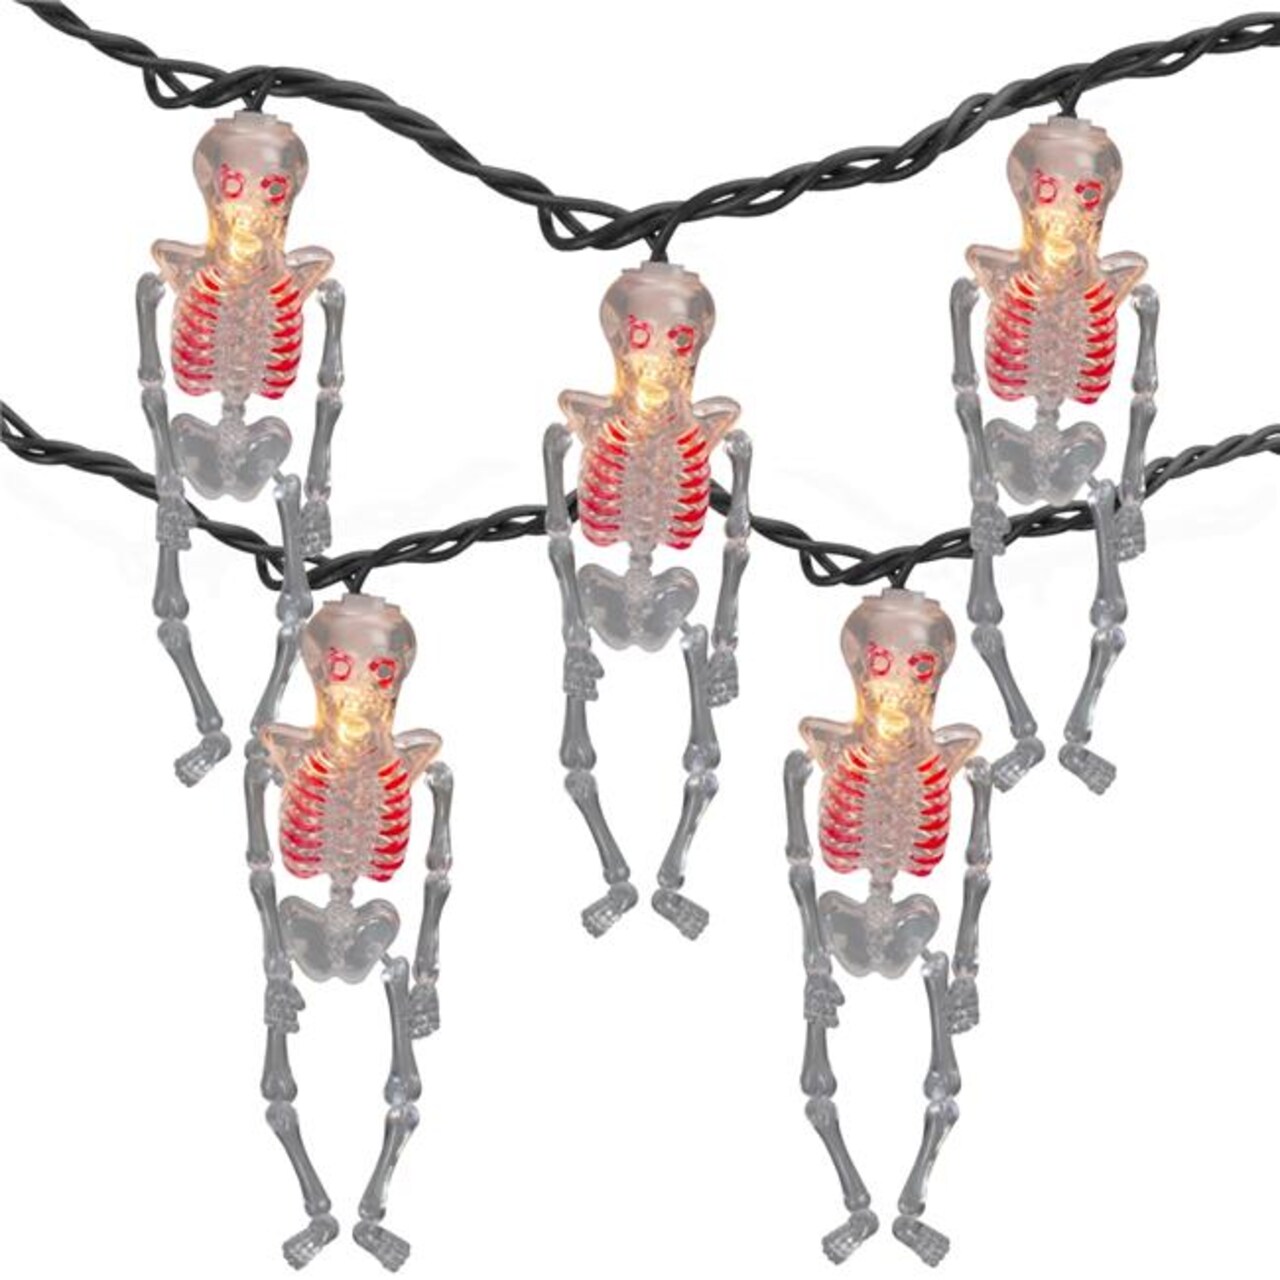 Northlight 34854973 7.5 ft. Wire Skeleton Halloween Lights, Black - 10 Count